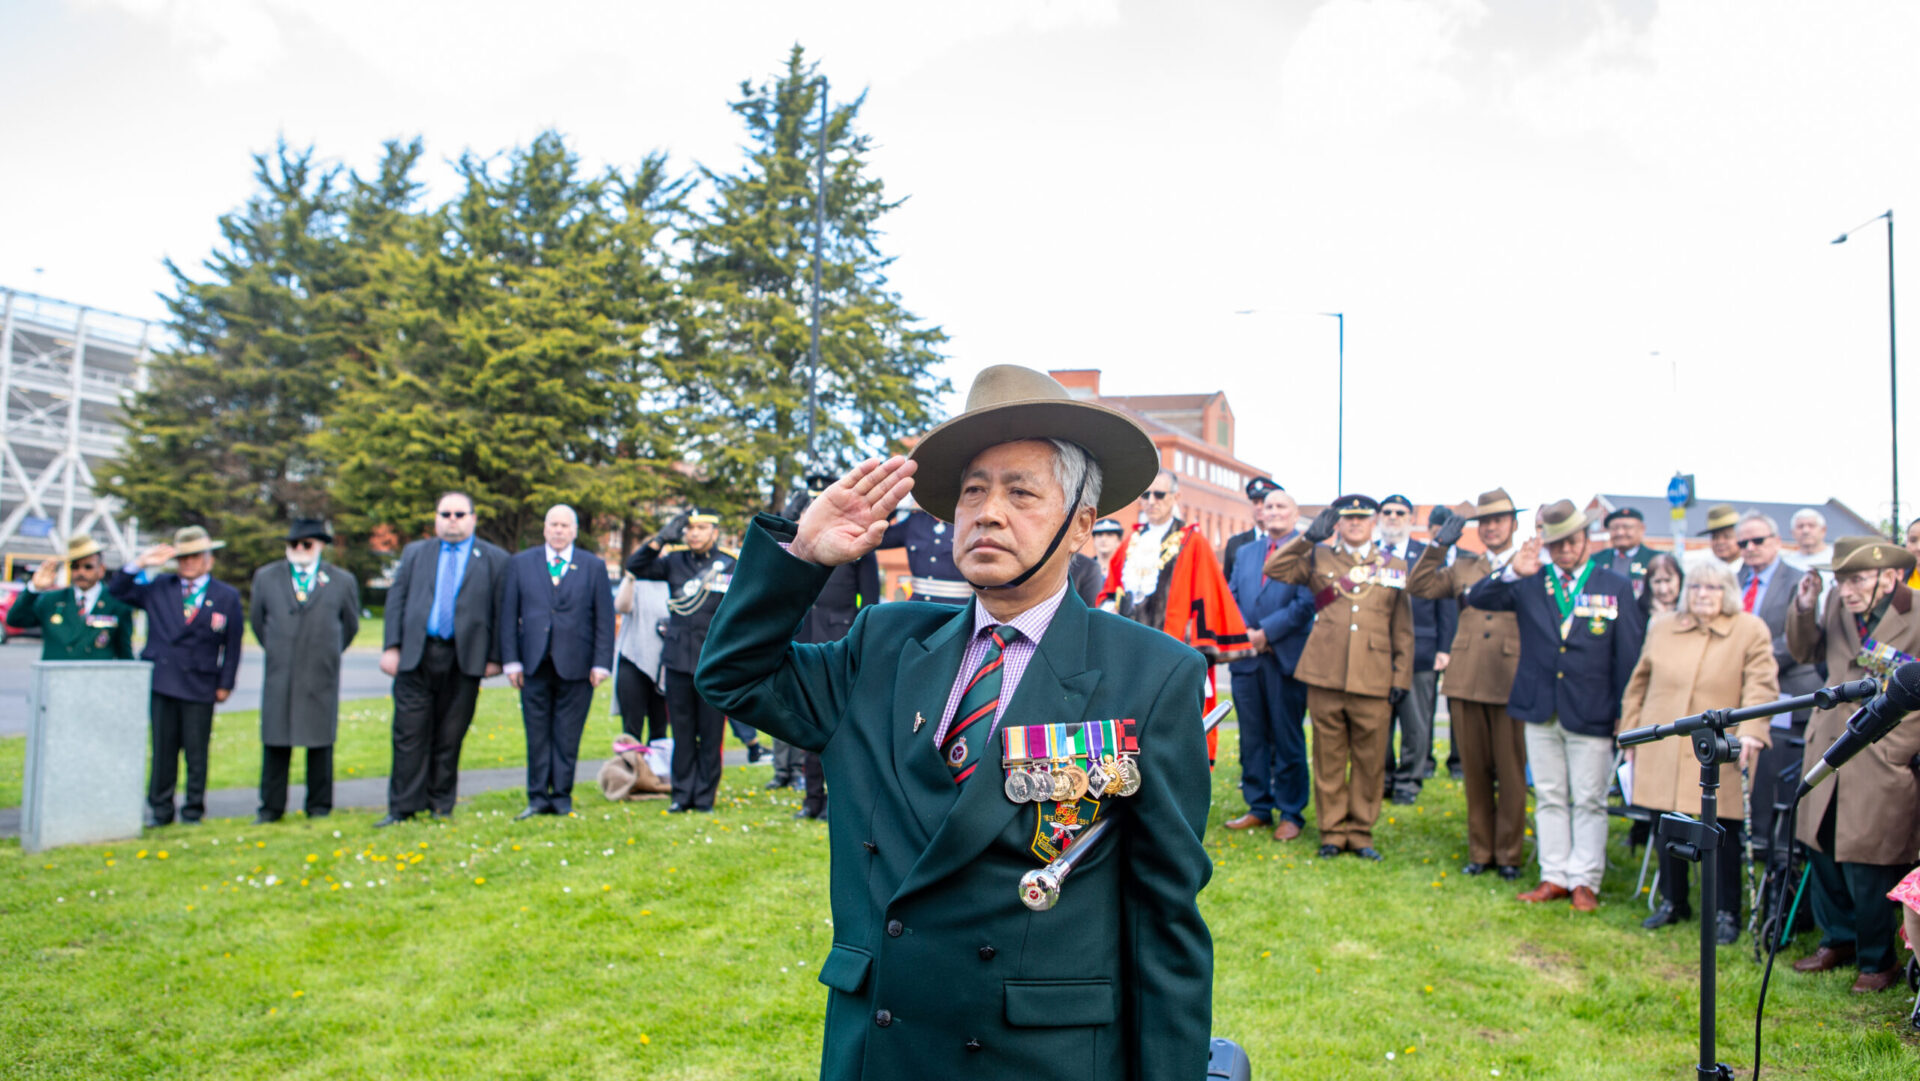 Gurkha Veterans in Nuneaton Pay Their Respects at the Gurkha Memorial